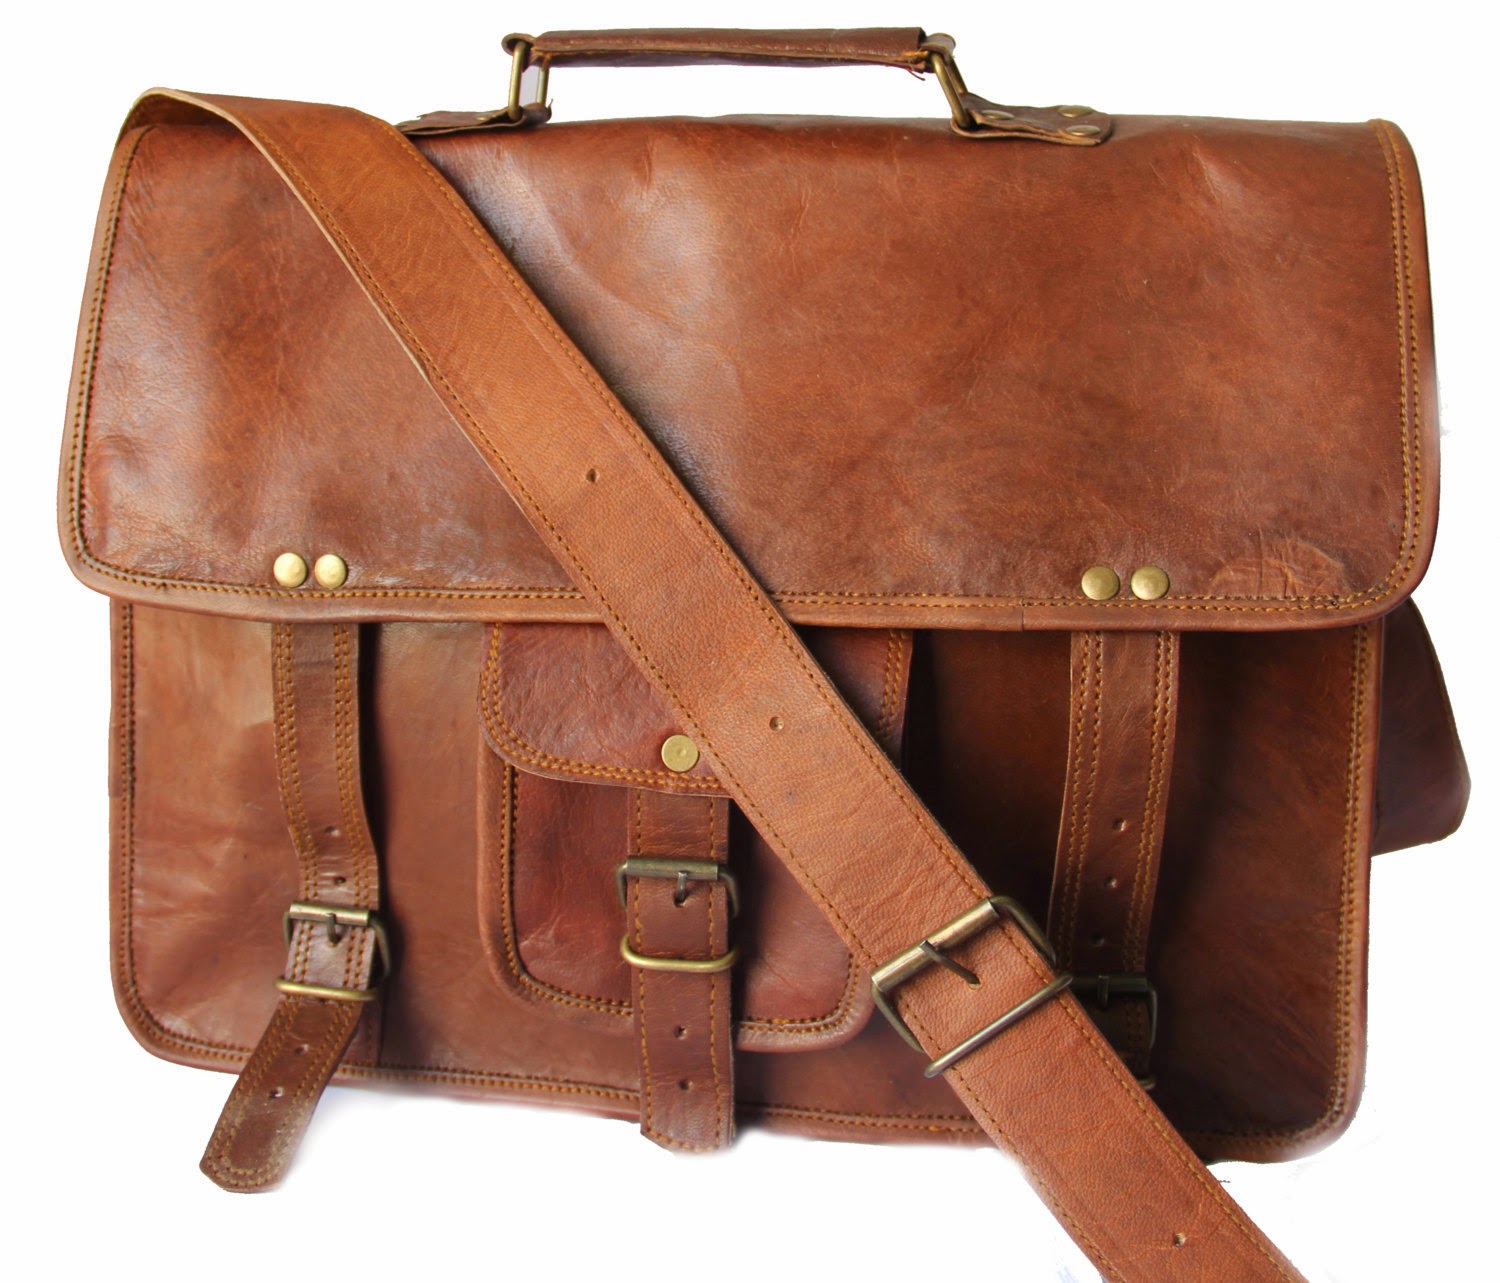 http://leatherhandmadebag.com/messenger-bag/handmade-leather-messenger-front-pocket-handmade-bags-13.html